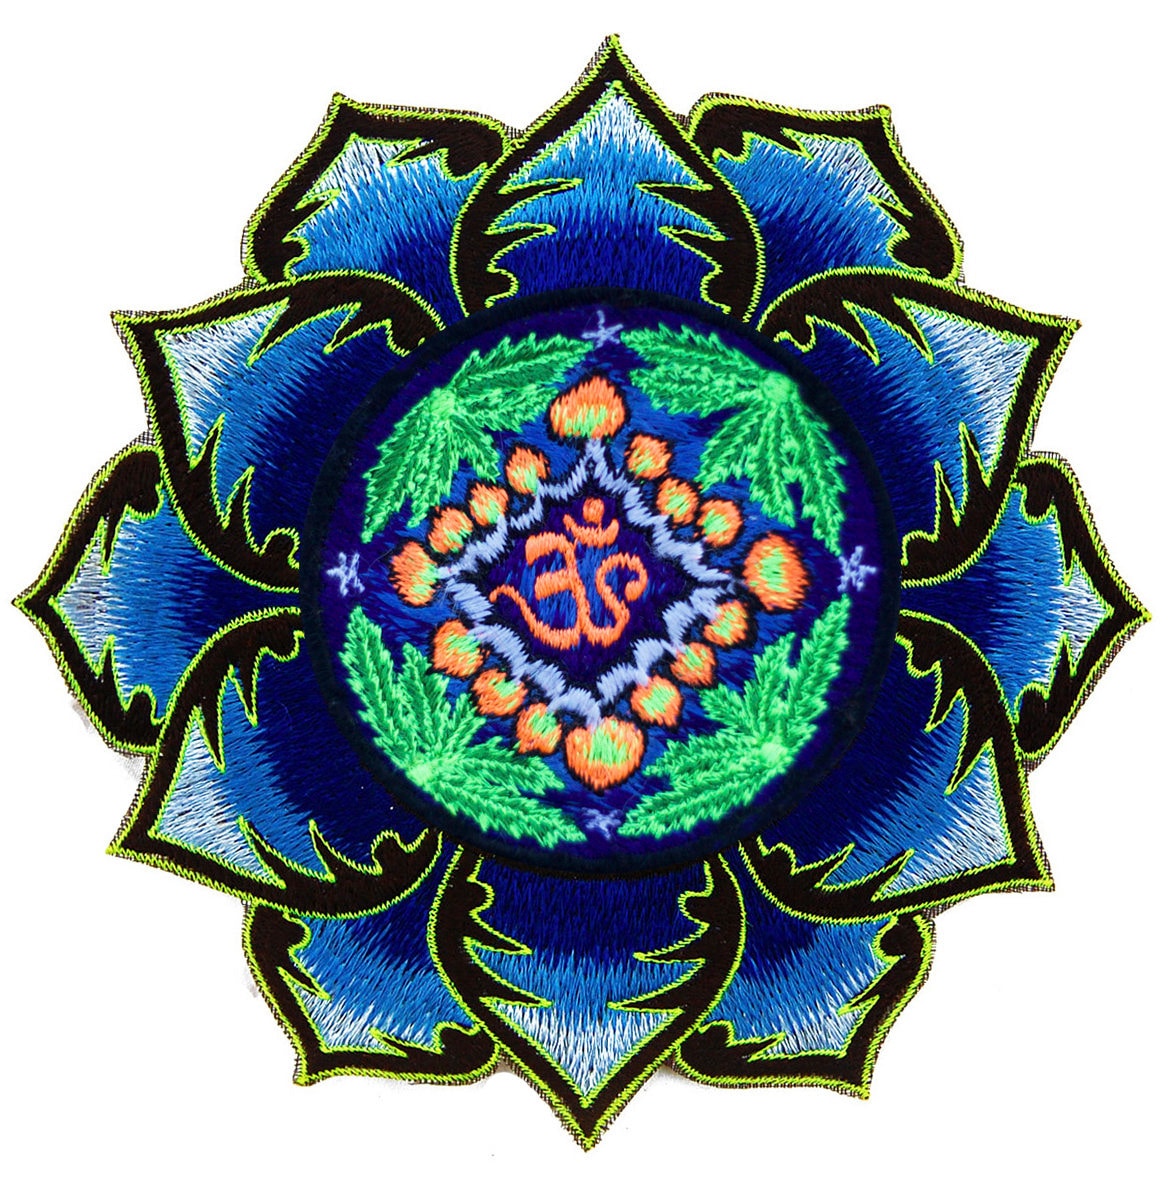 AUM Weed Magic Mushroom Mandala Patch Psychedelic Psilocybin Shroom psy blacklight glowing embroidery art